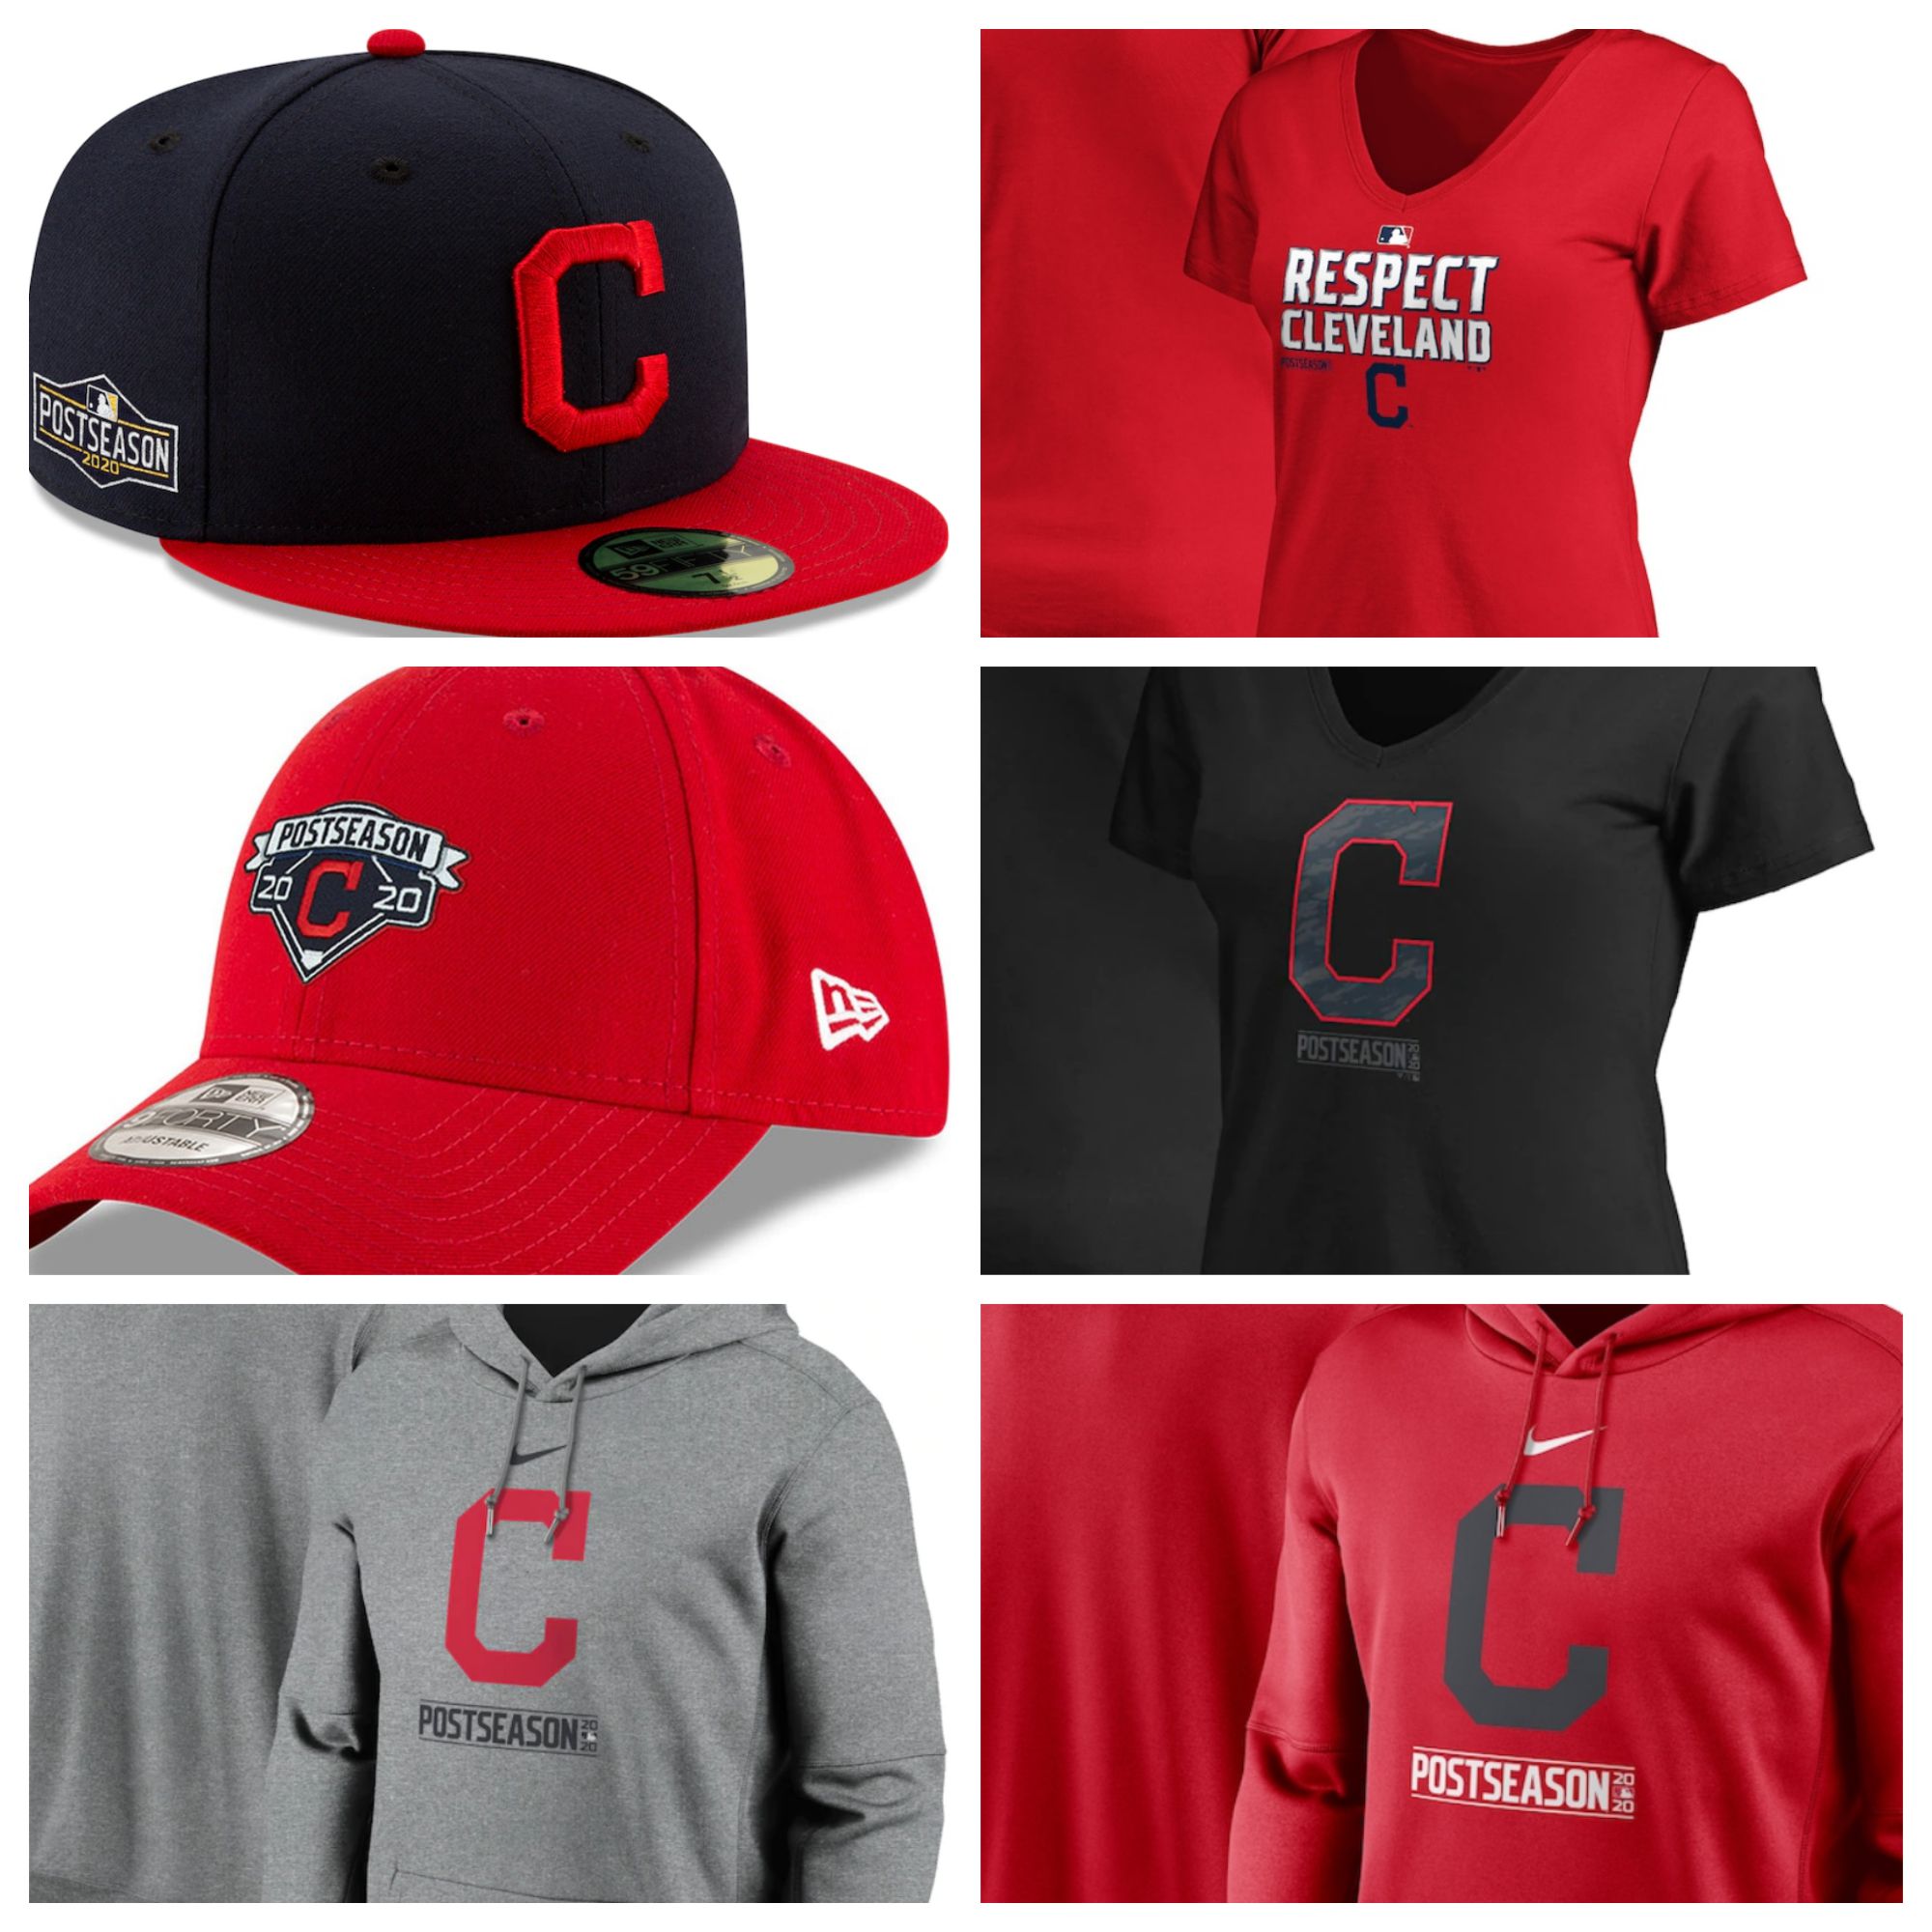 Cleveland Indians 2020 postseason apparel on sale as season winds